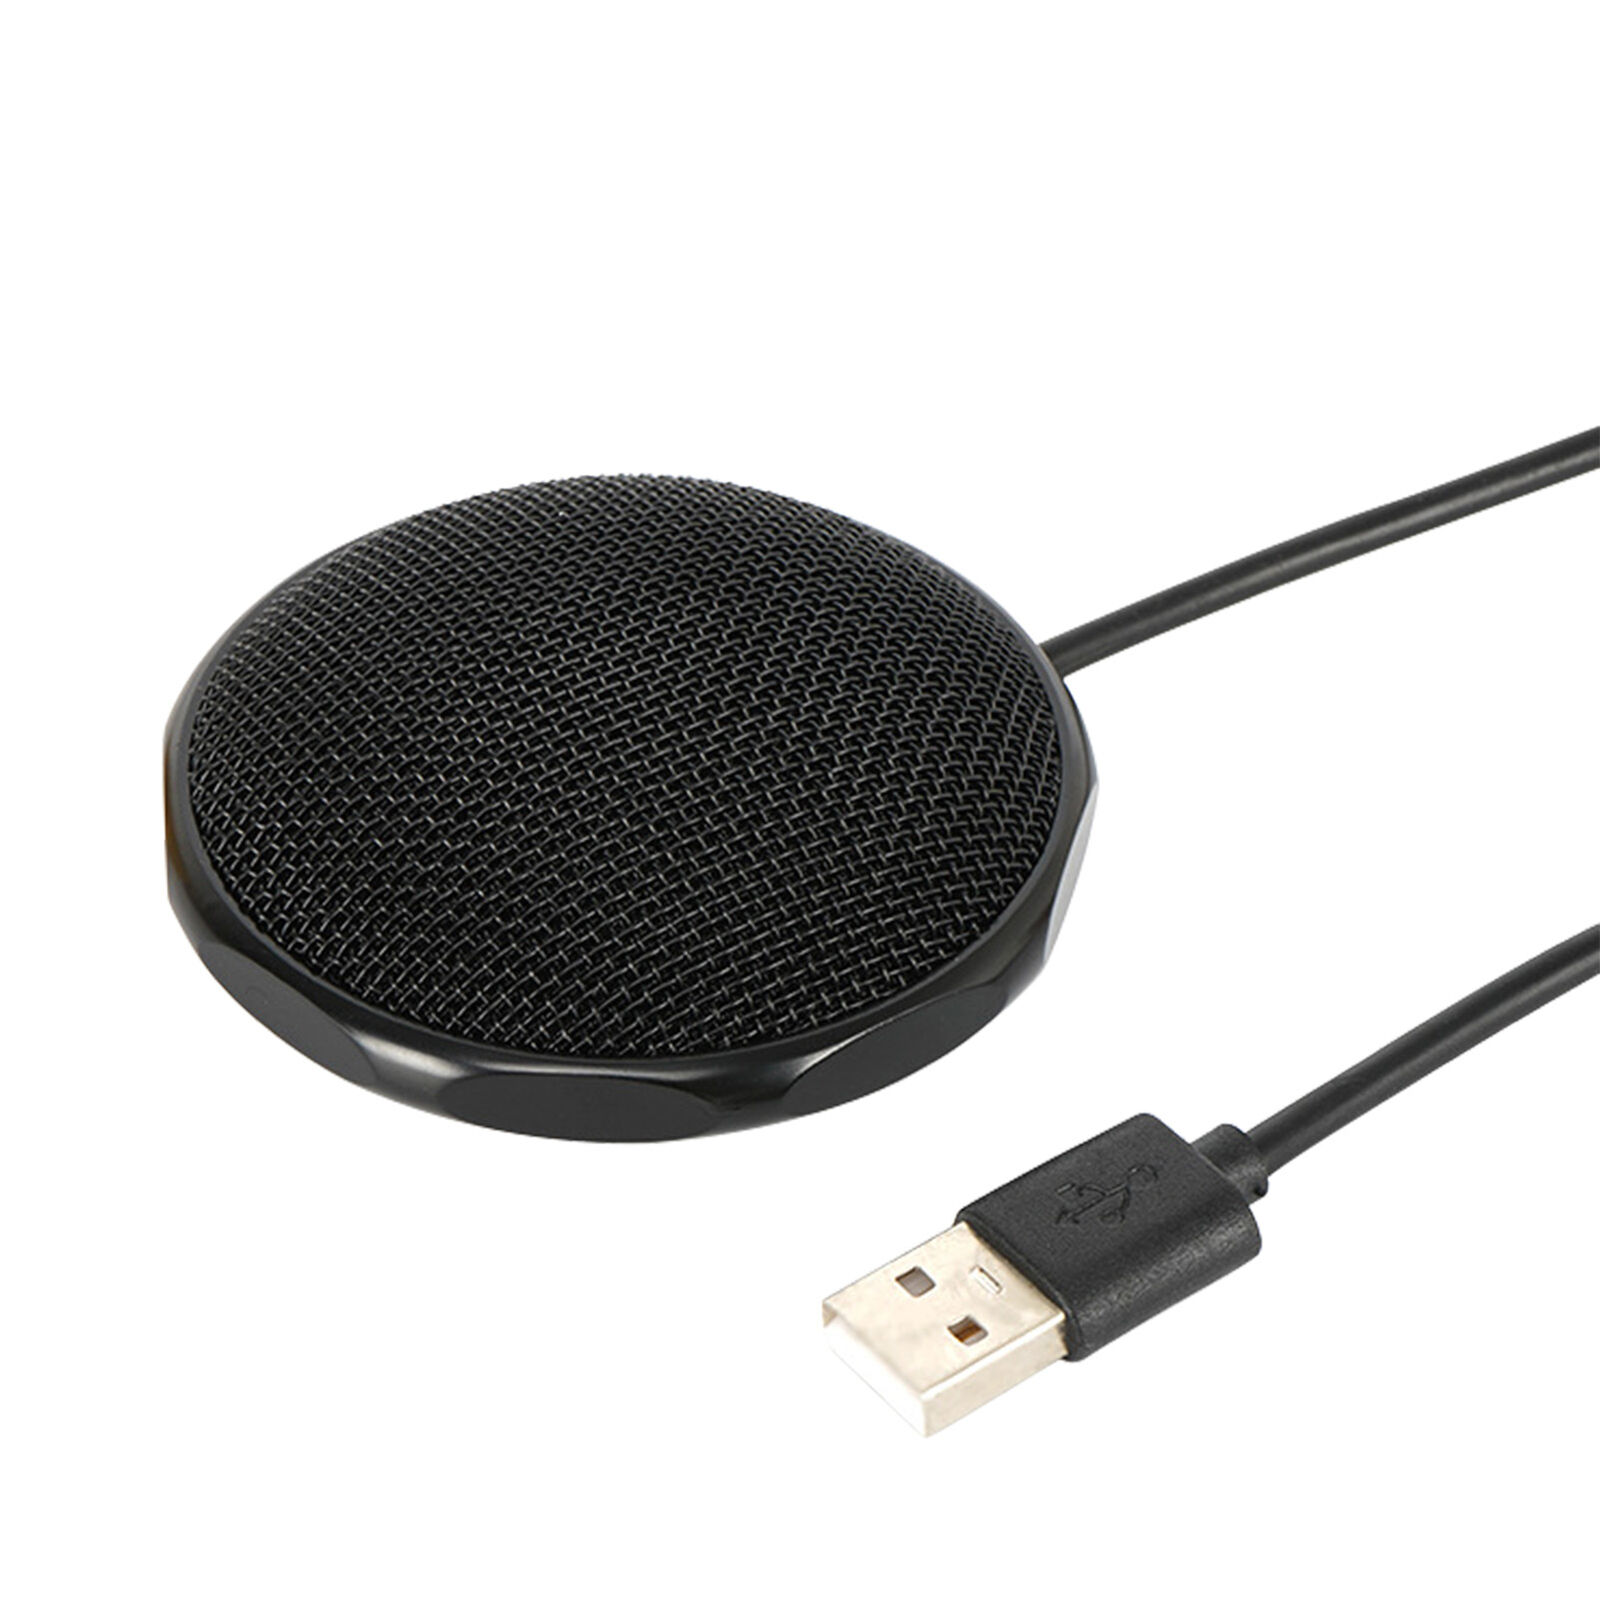 Microphone Omnidirectional Plug Play Sensitive Condenser Microphone Black